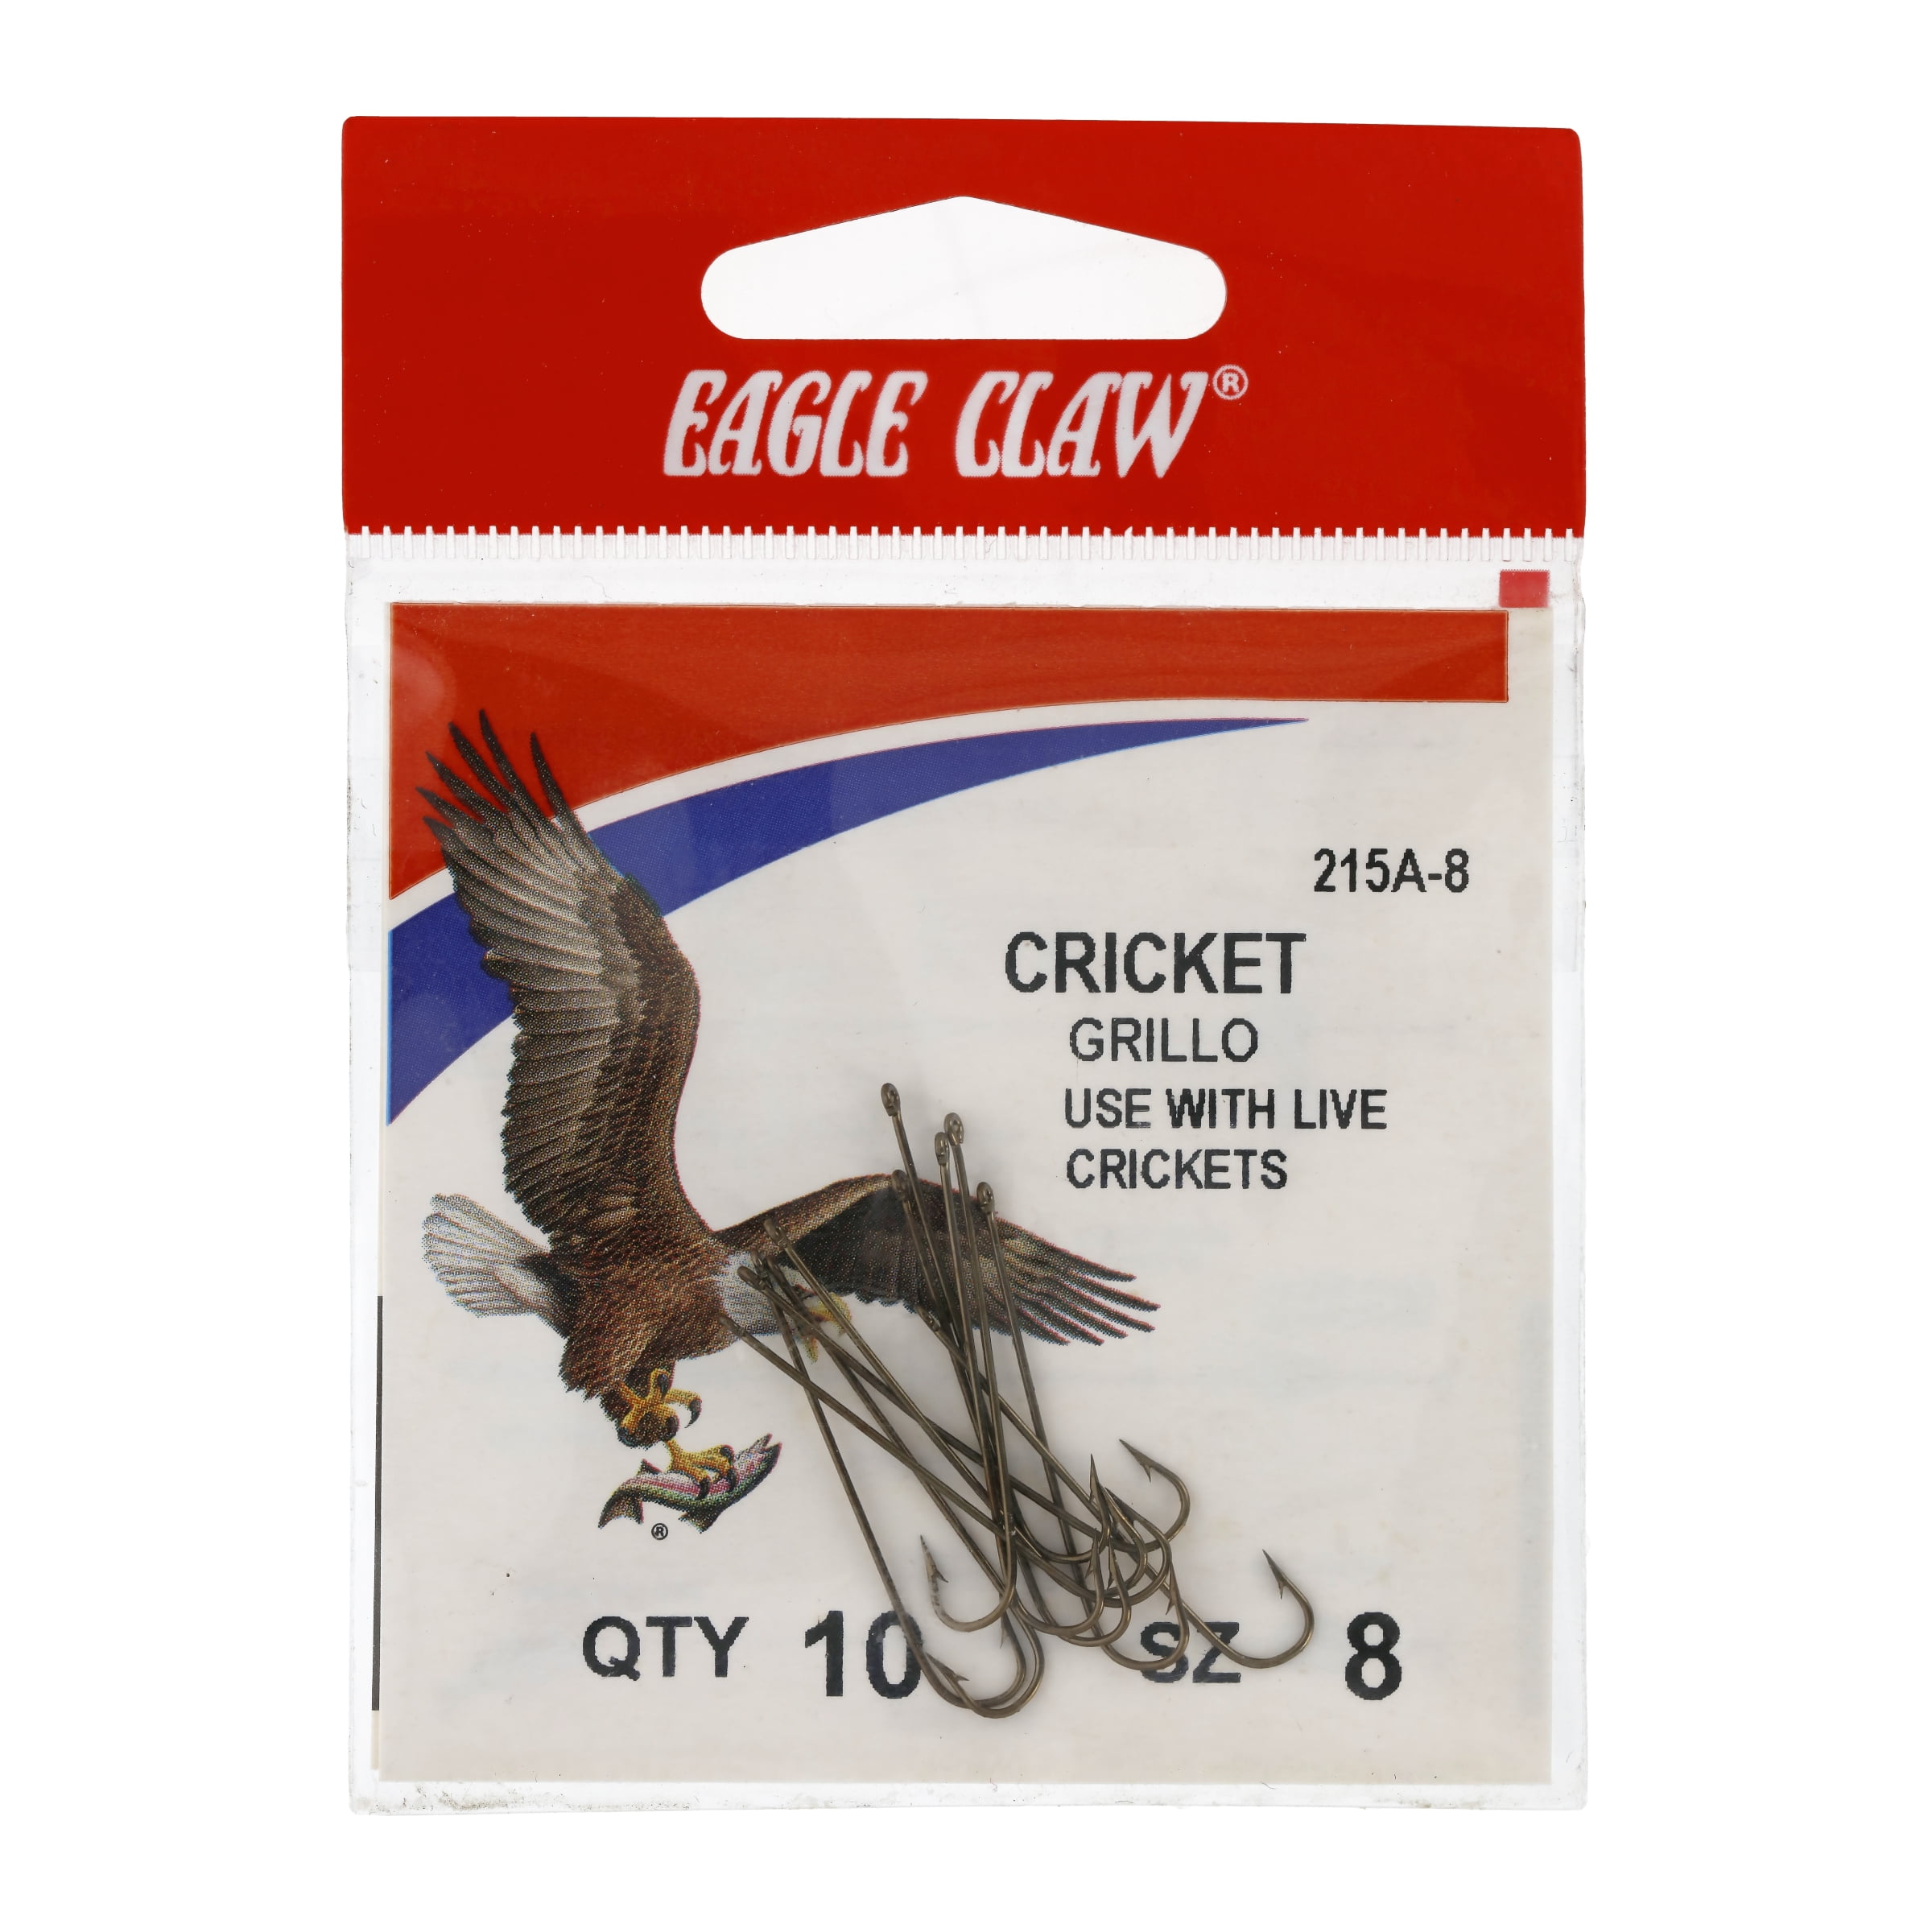 Eagle Claw Size 4 Aberdeen Fishing Hooks. 100 Pack. Pan Fish Fishing Hooks